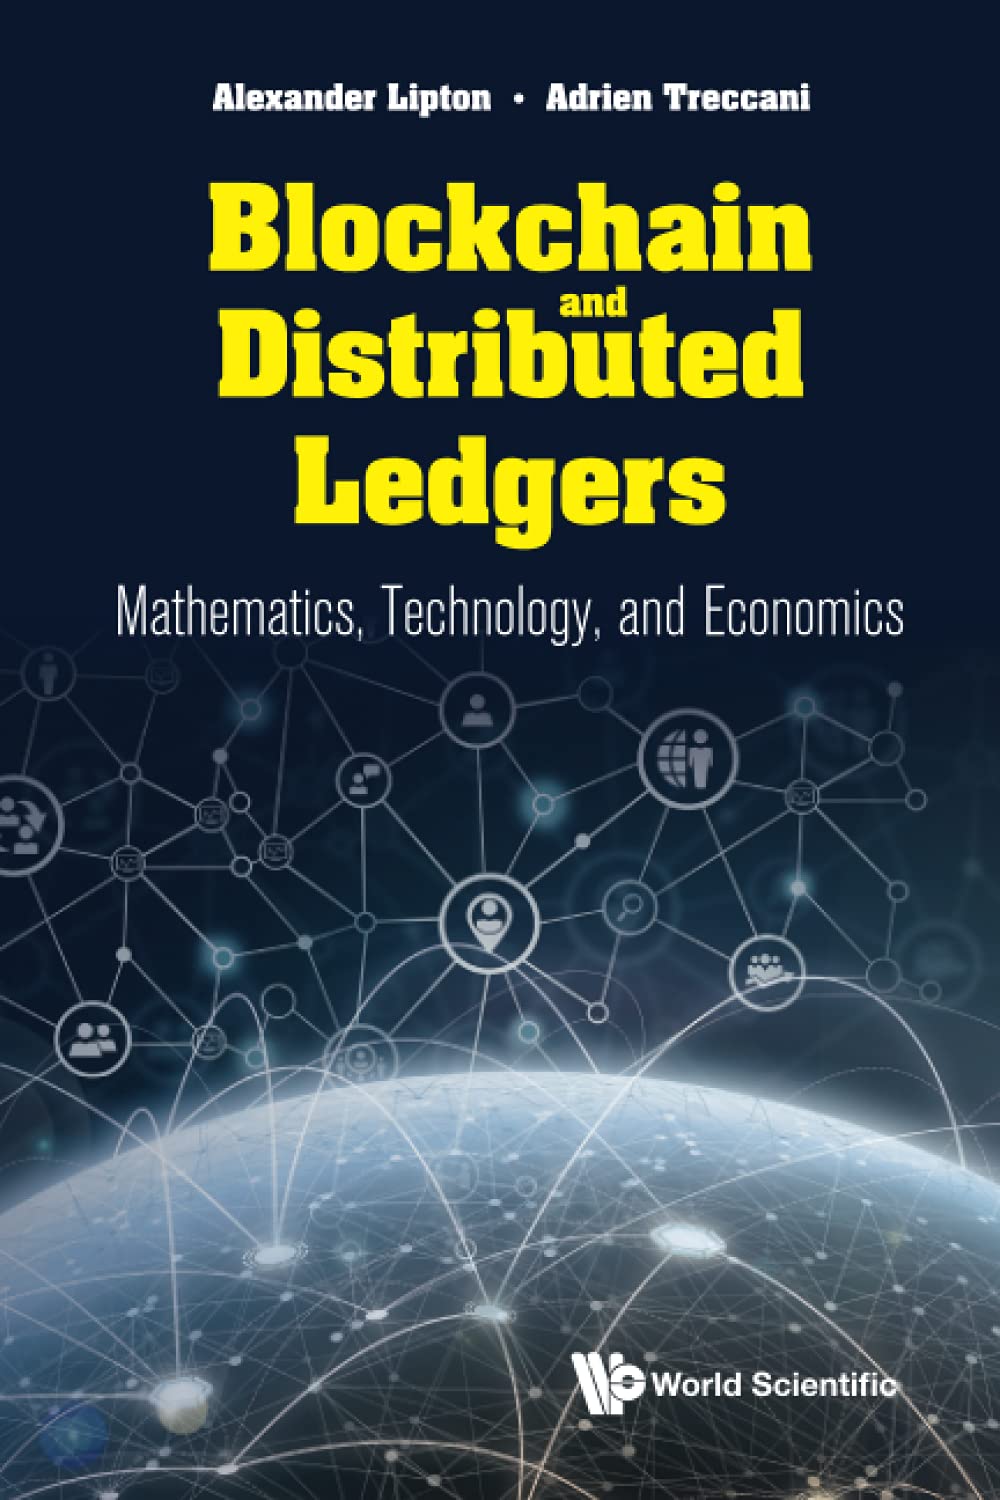 Blockchain And Distributed Ledgers: Mathematics, Technology, And Economics